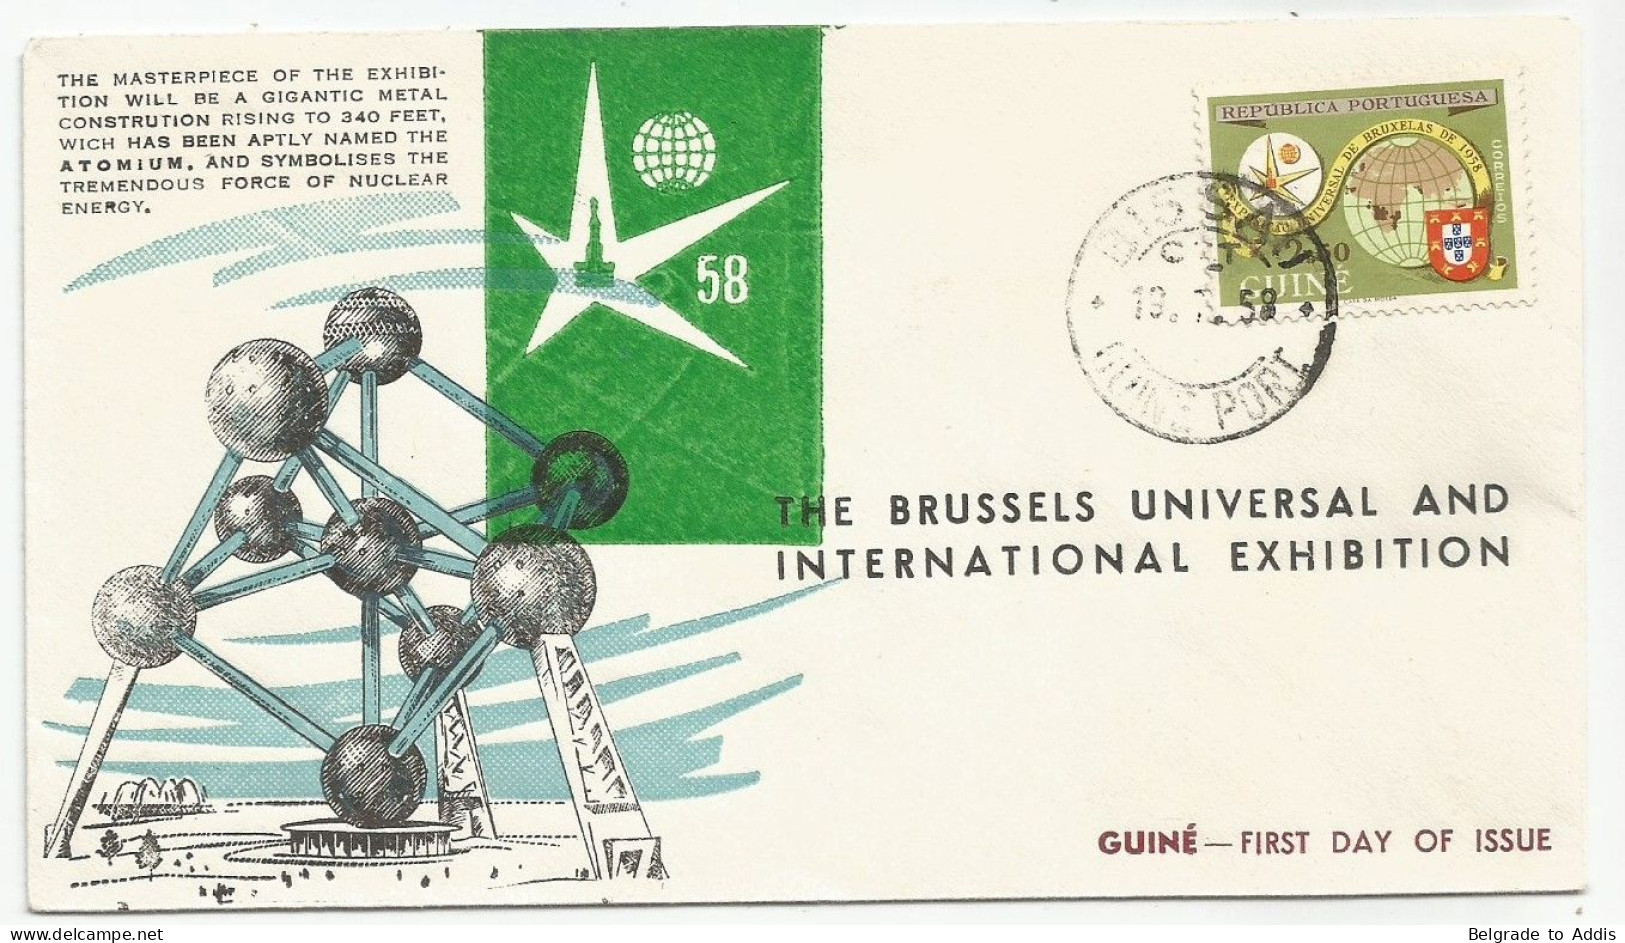 Guinea Bissau Portugal Commemorative Cover & Cancel 1958 Brussels Universal Exhibition FDC - Portuguese Guinea